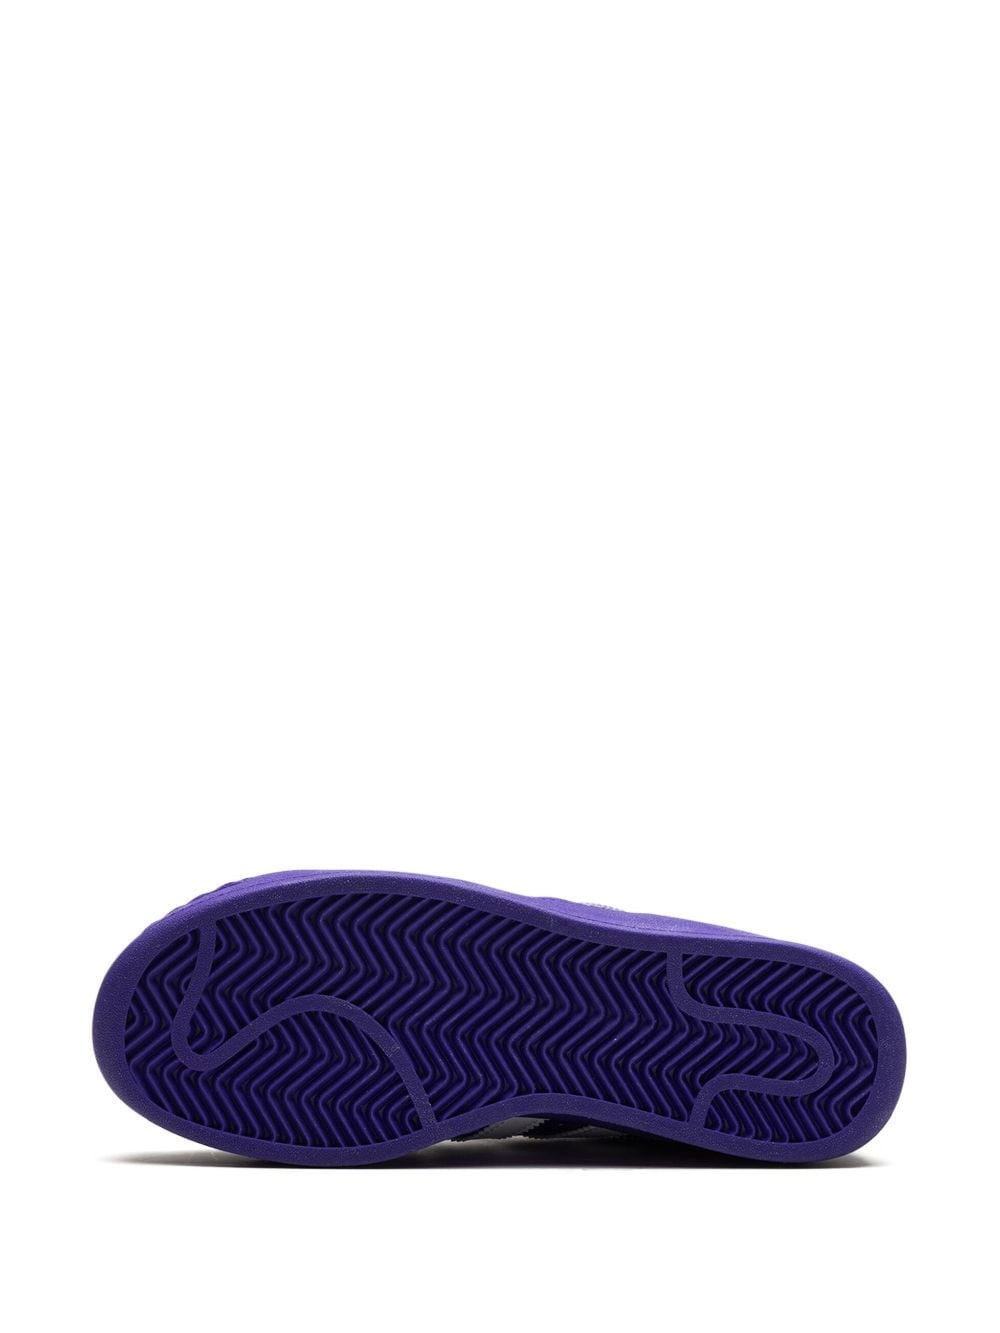 Superstar XLG "Purple" sneakers - 4